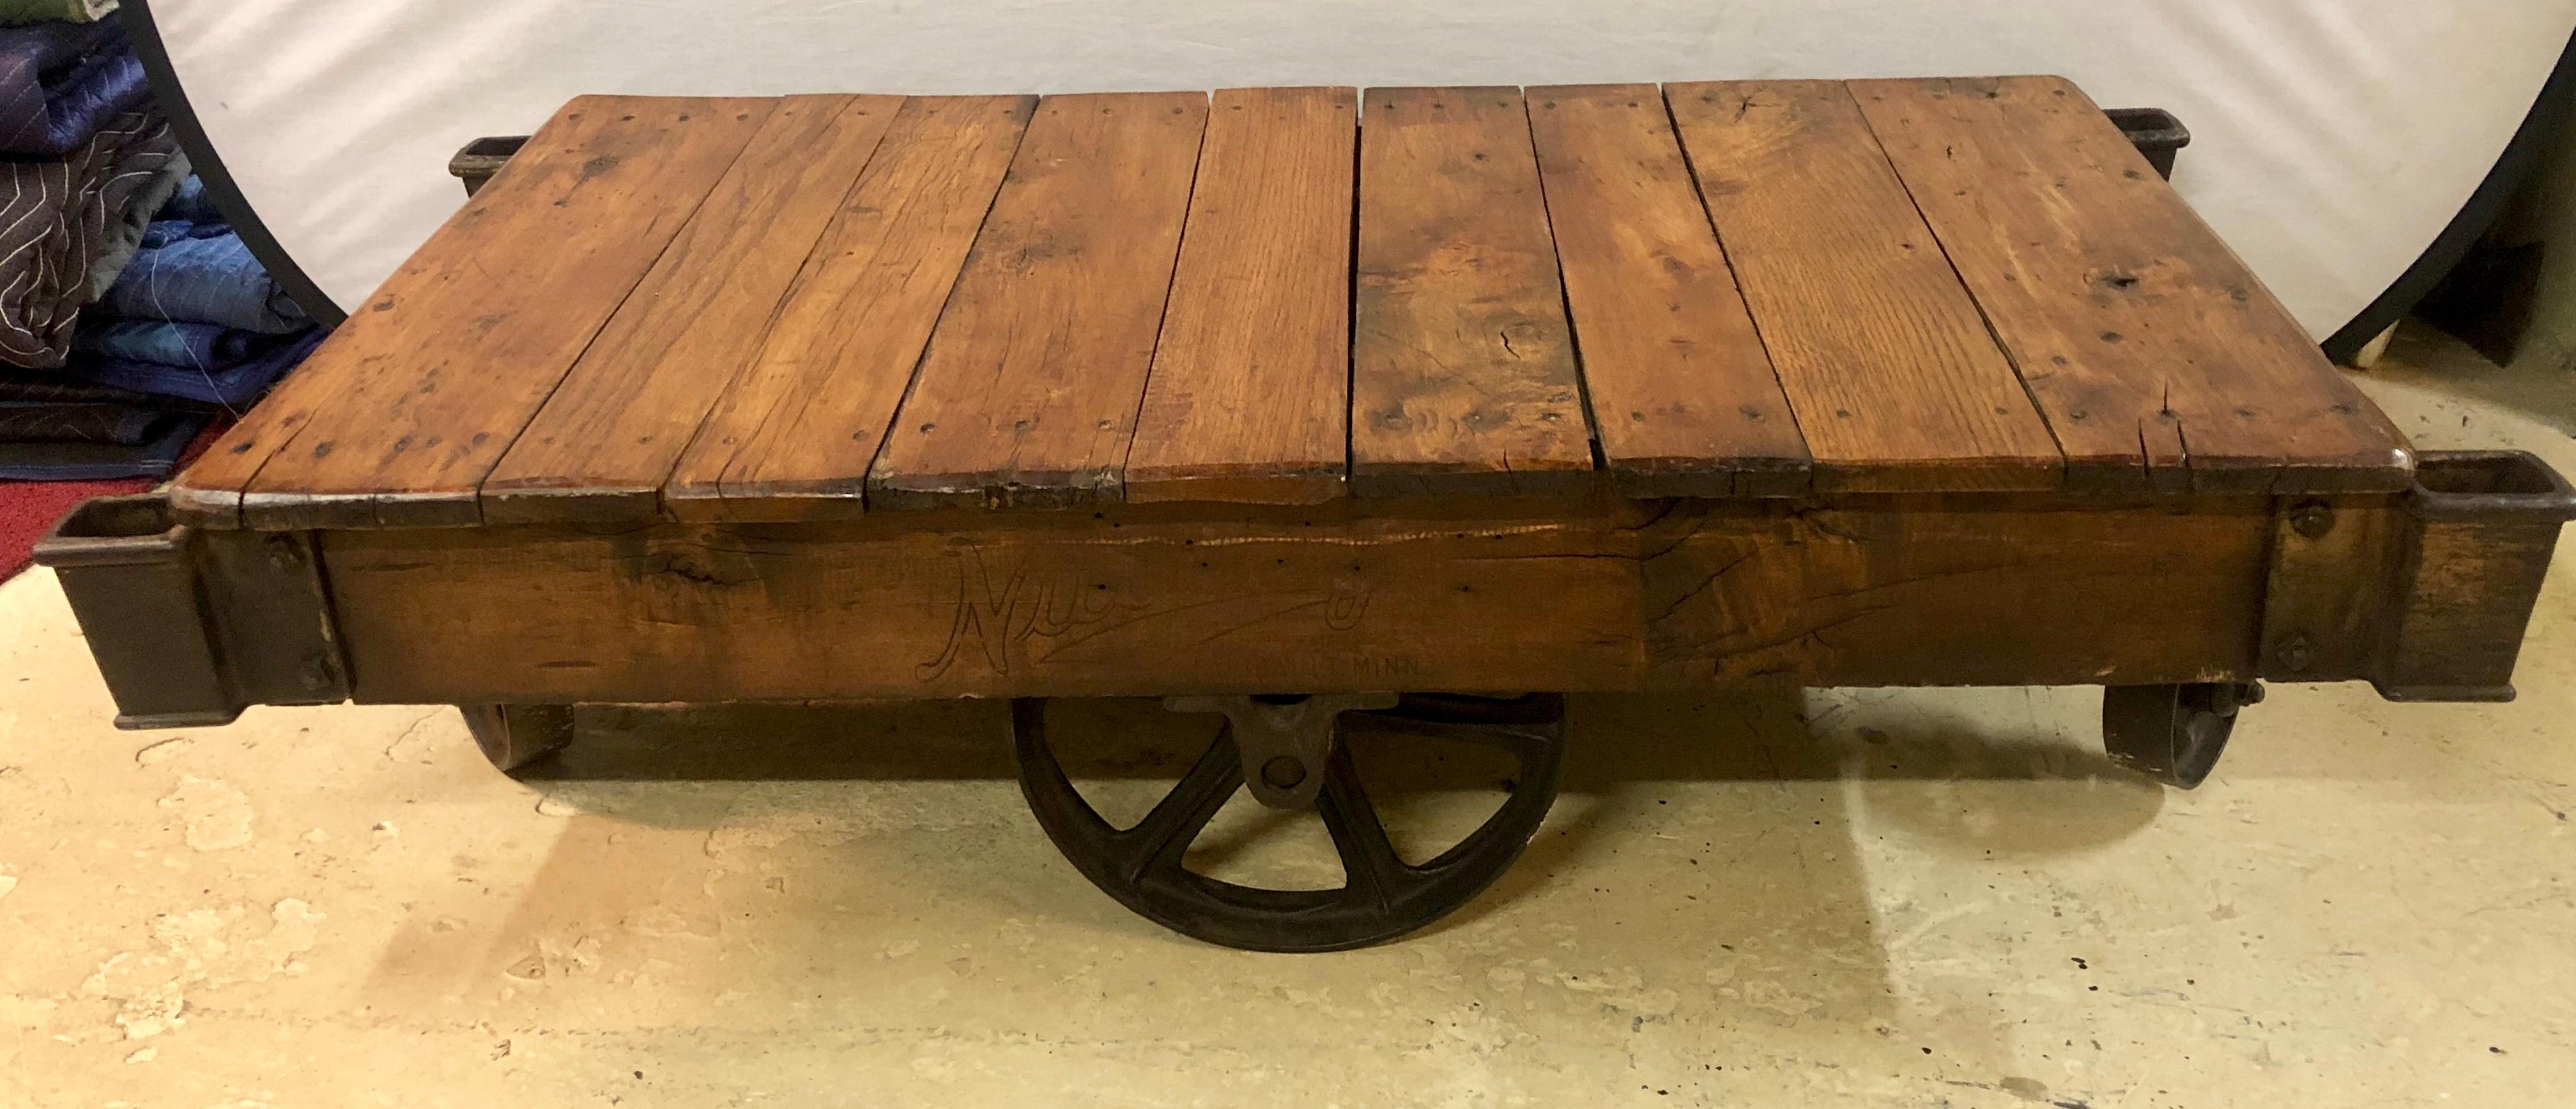 19th century industrial wheeled trolley coffee table stamped Fairbanks Minn. 

Lia.